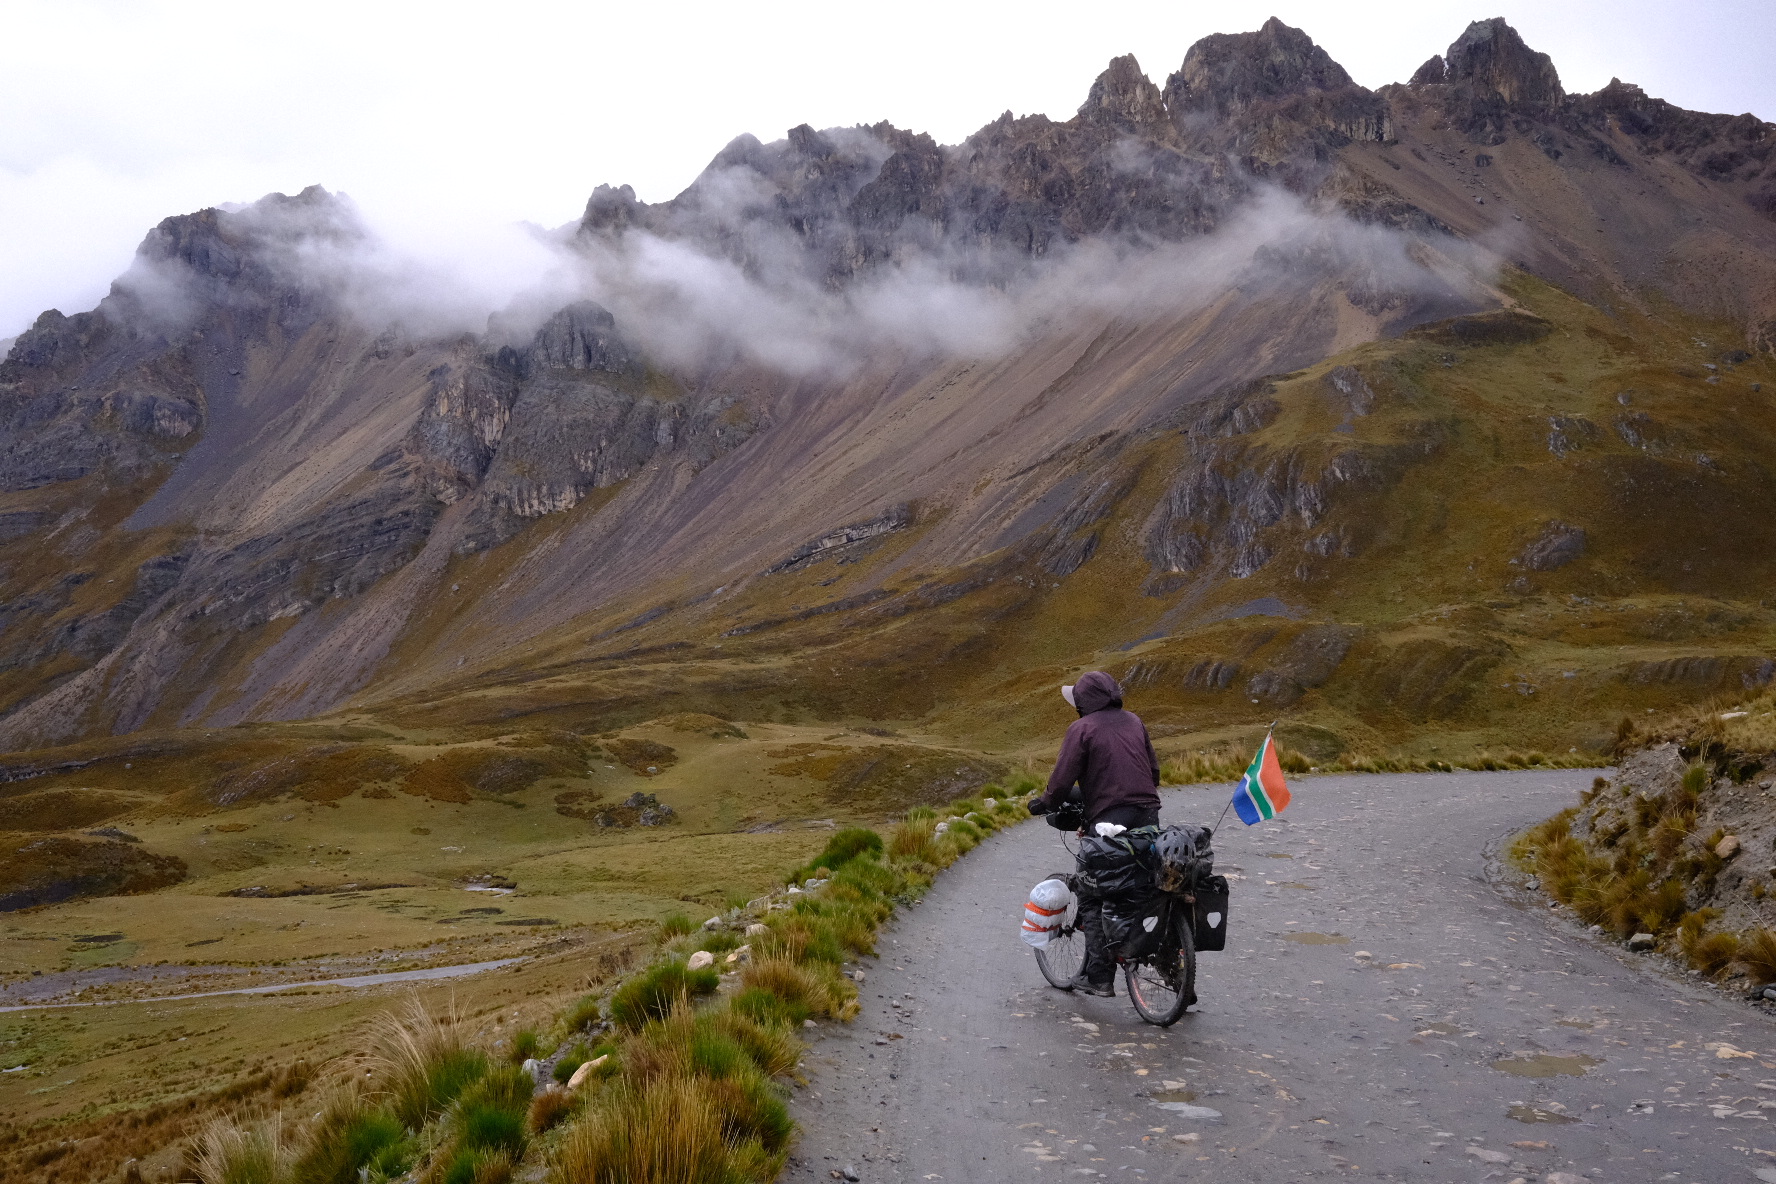 Part 4 of the 2 Amigos Adventure (Cordillera Huayhuash Hike)